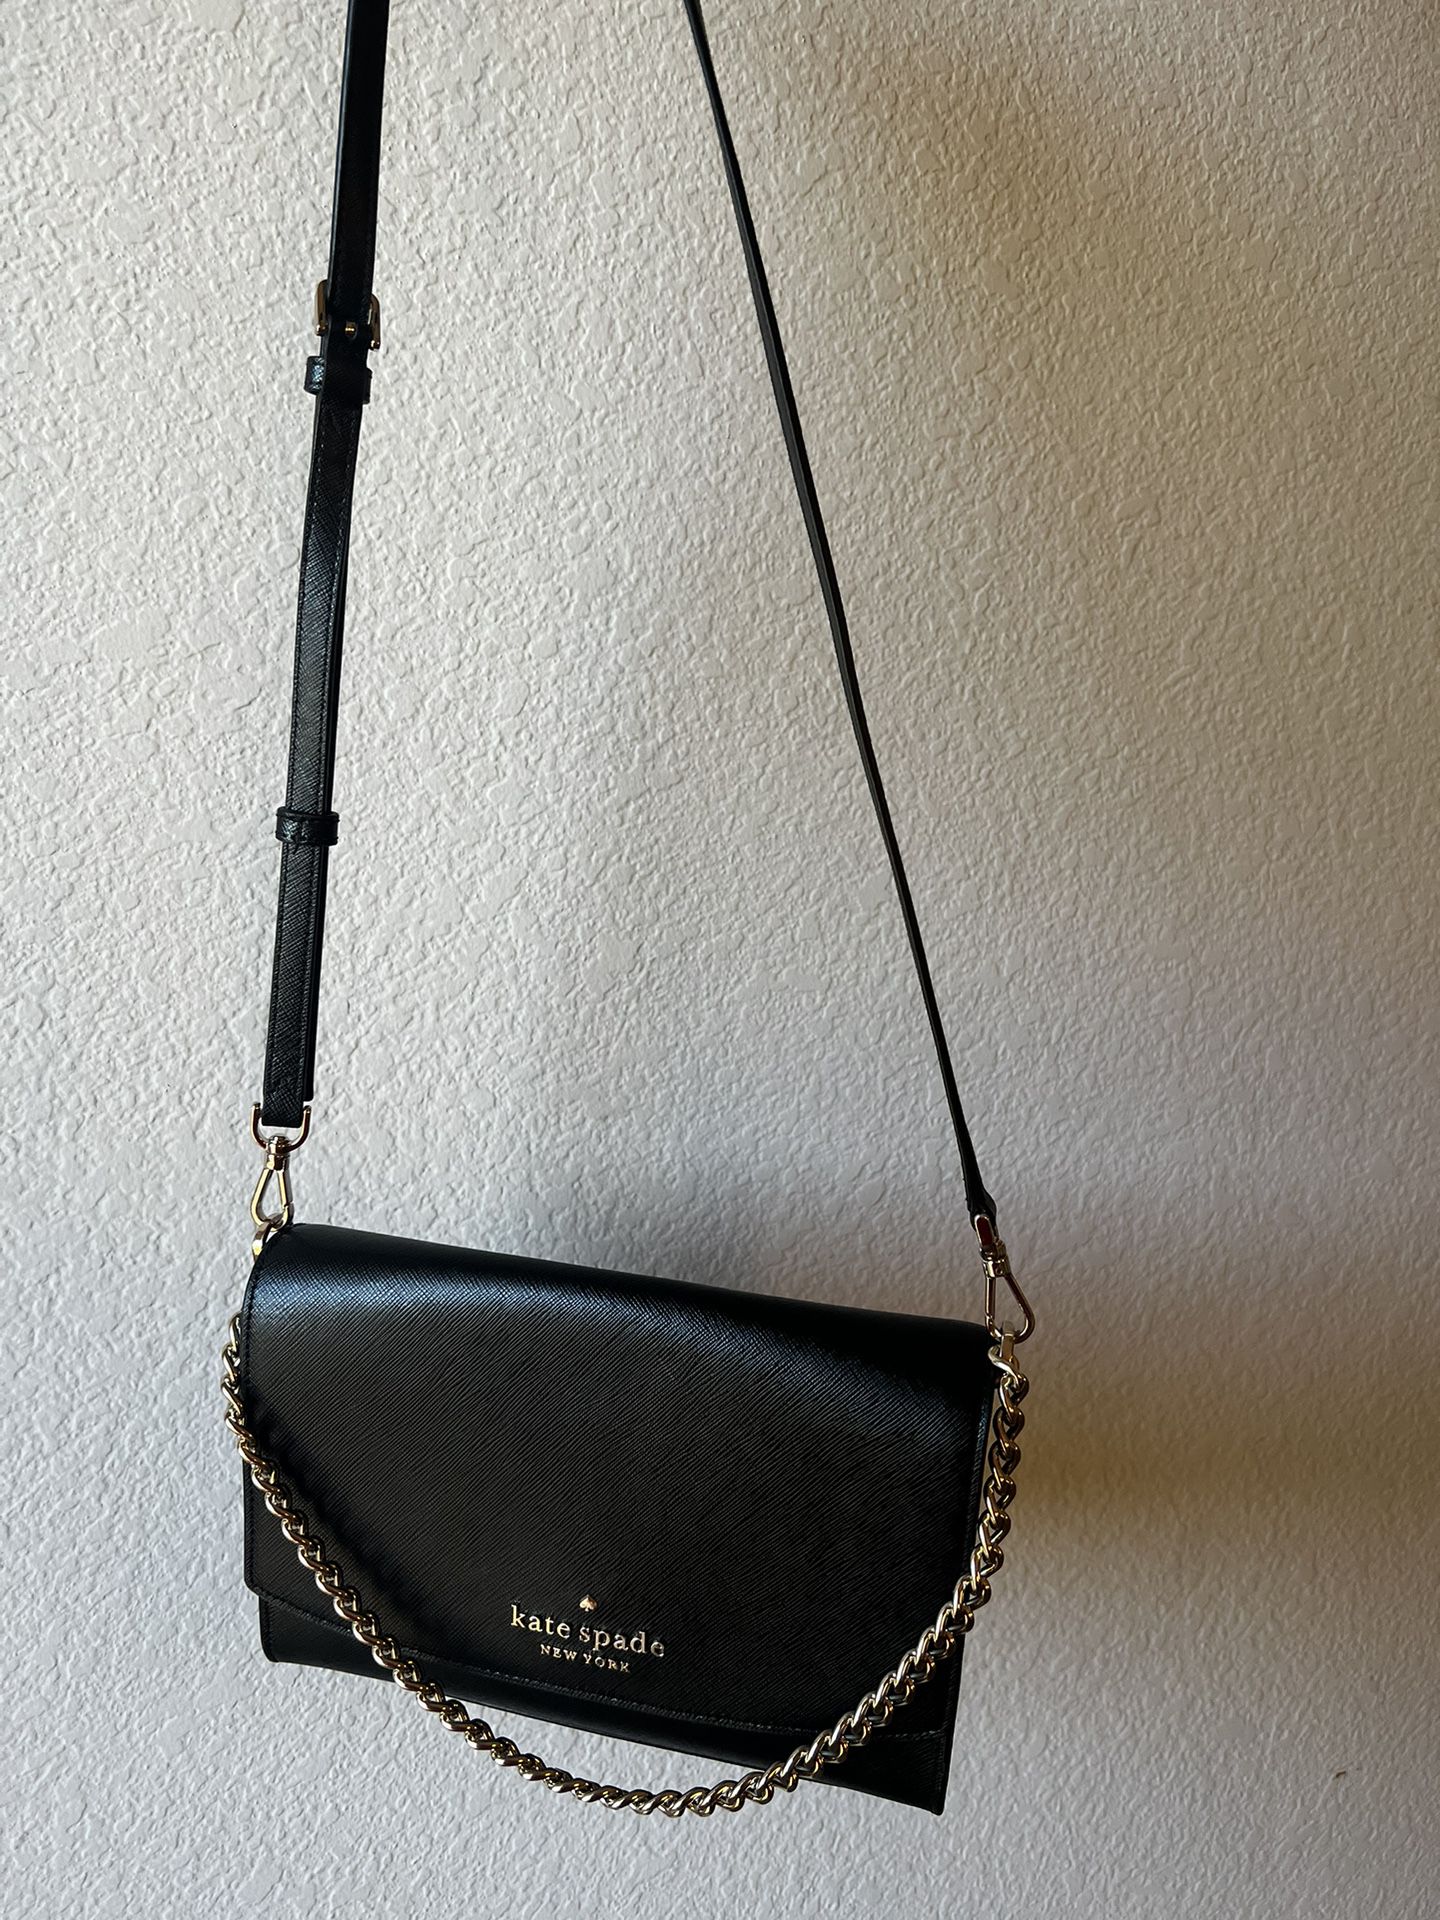 Kate Spade Crossbody Bag for Sale in Vallejo, CA - OfferUp